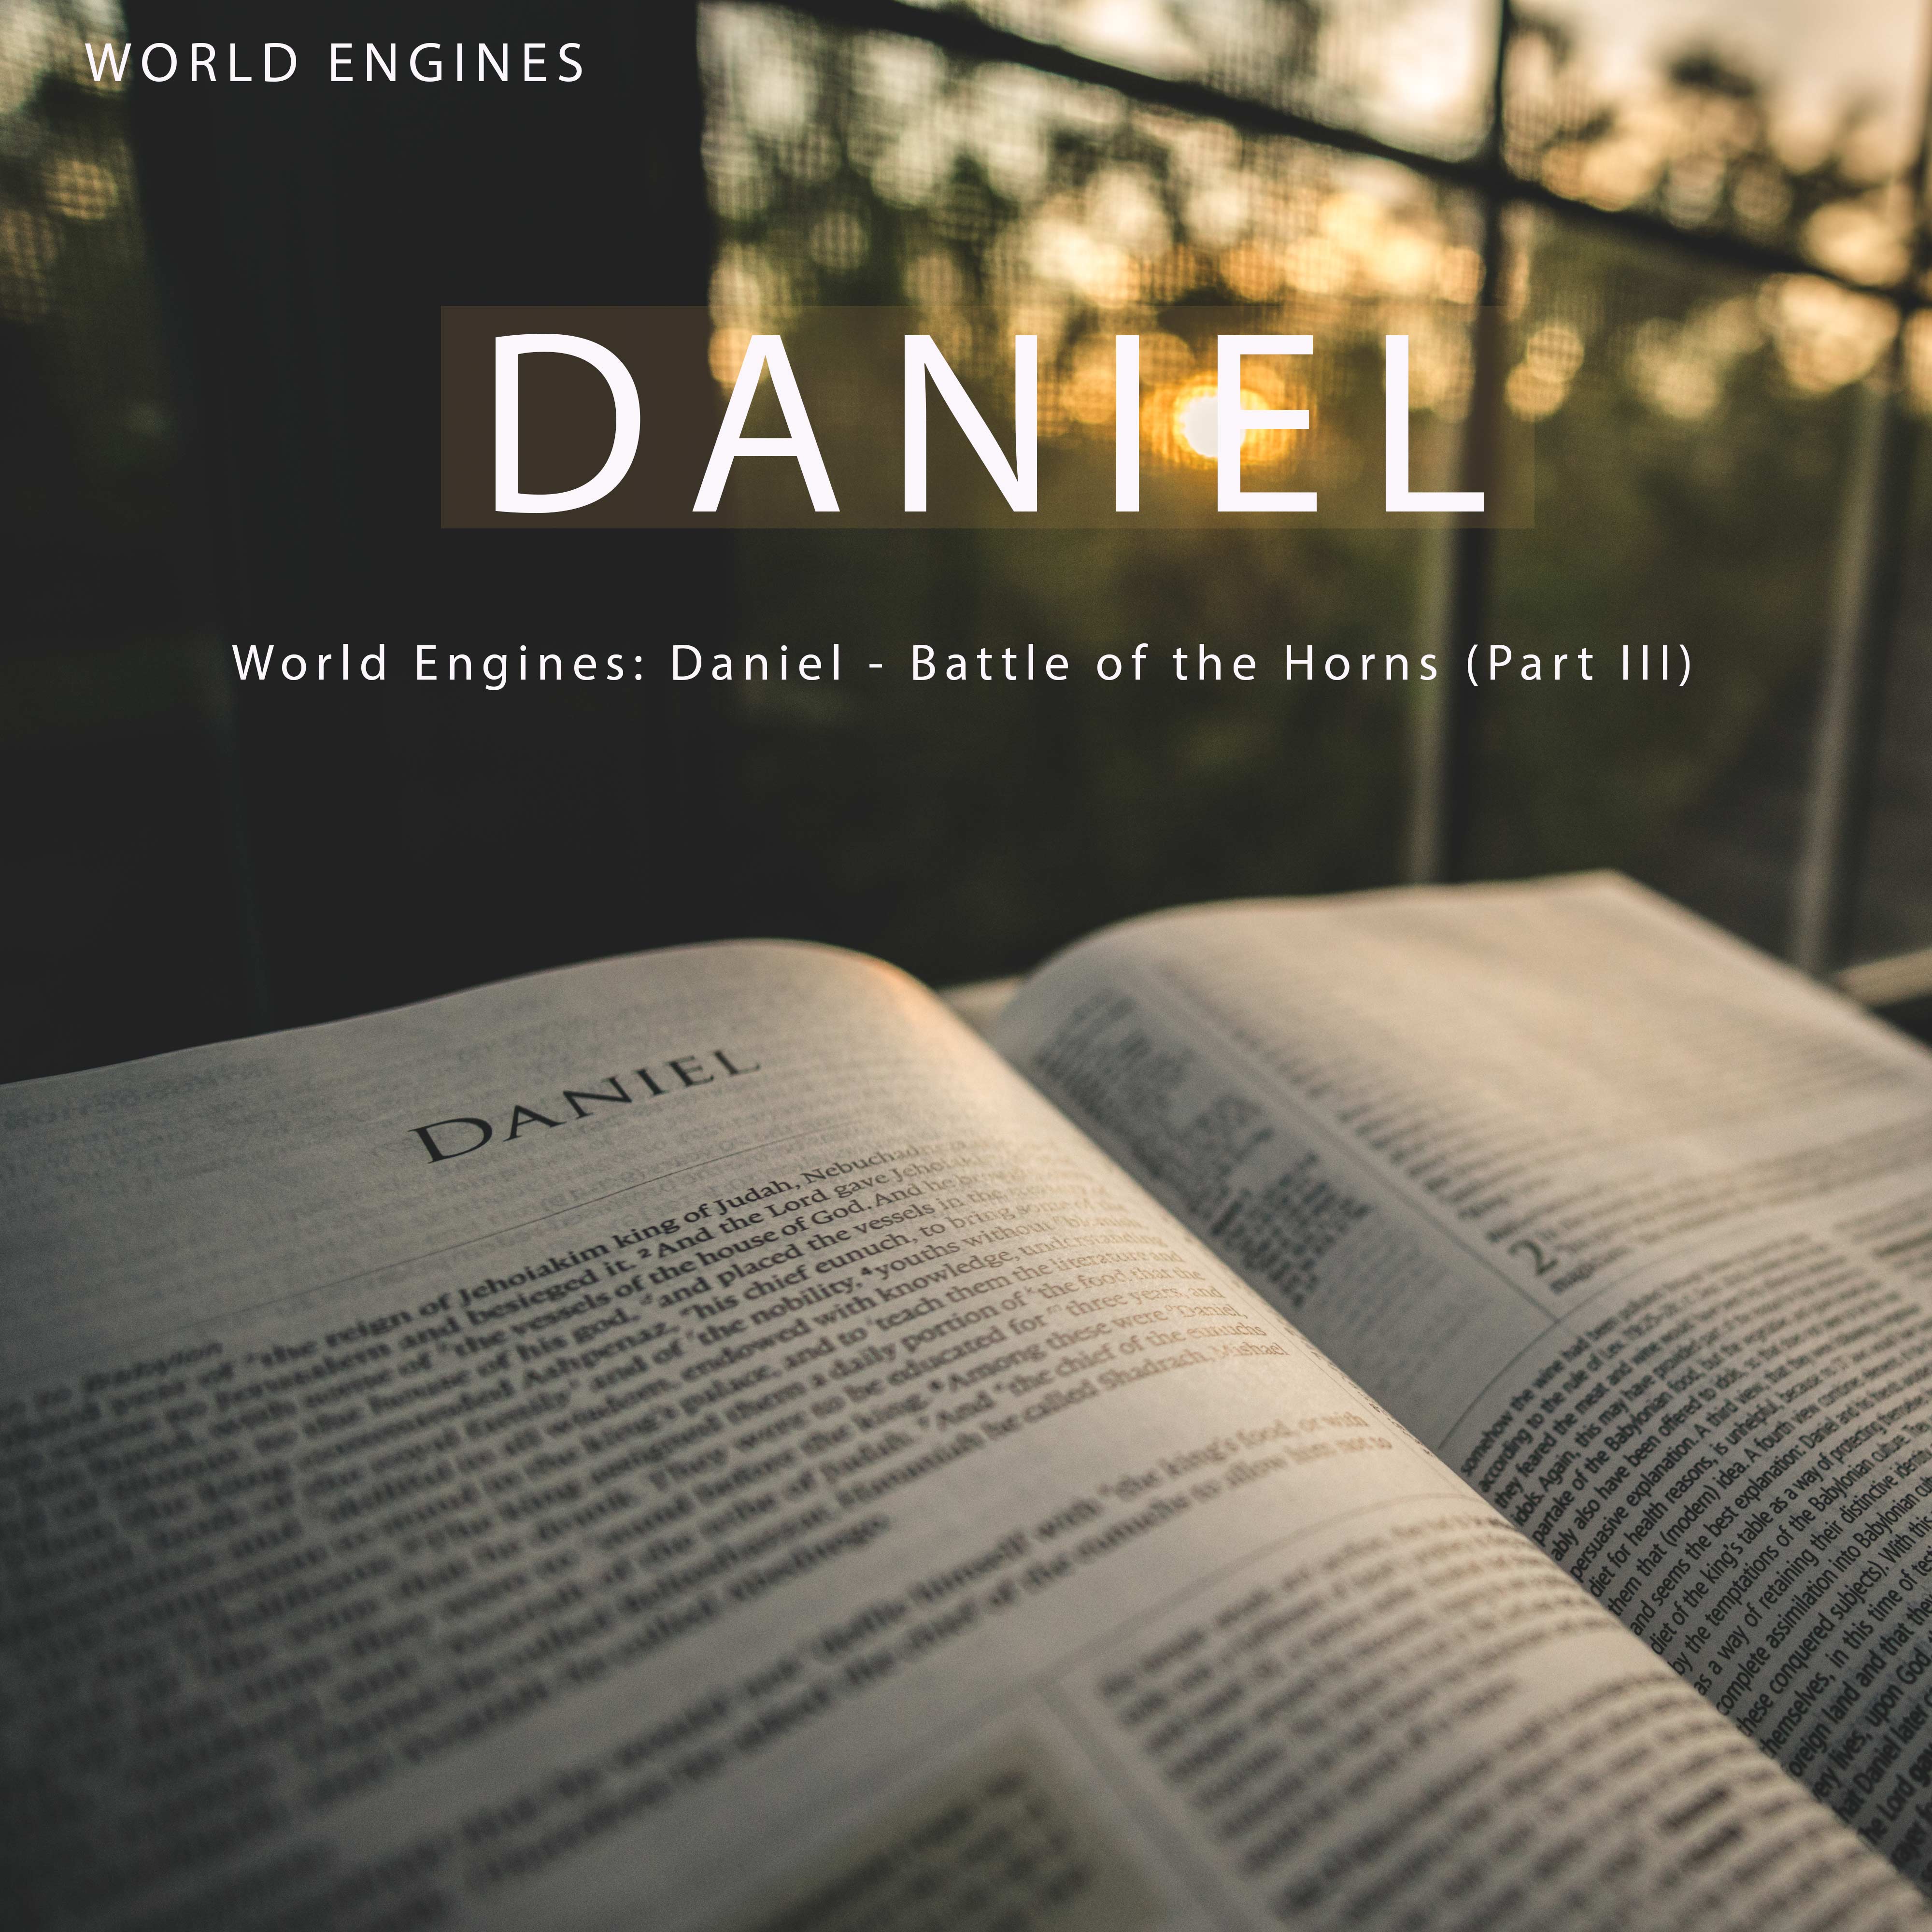 World Engines - Daniel - Qualities of a World Engine